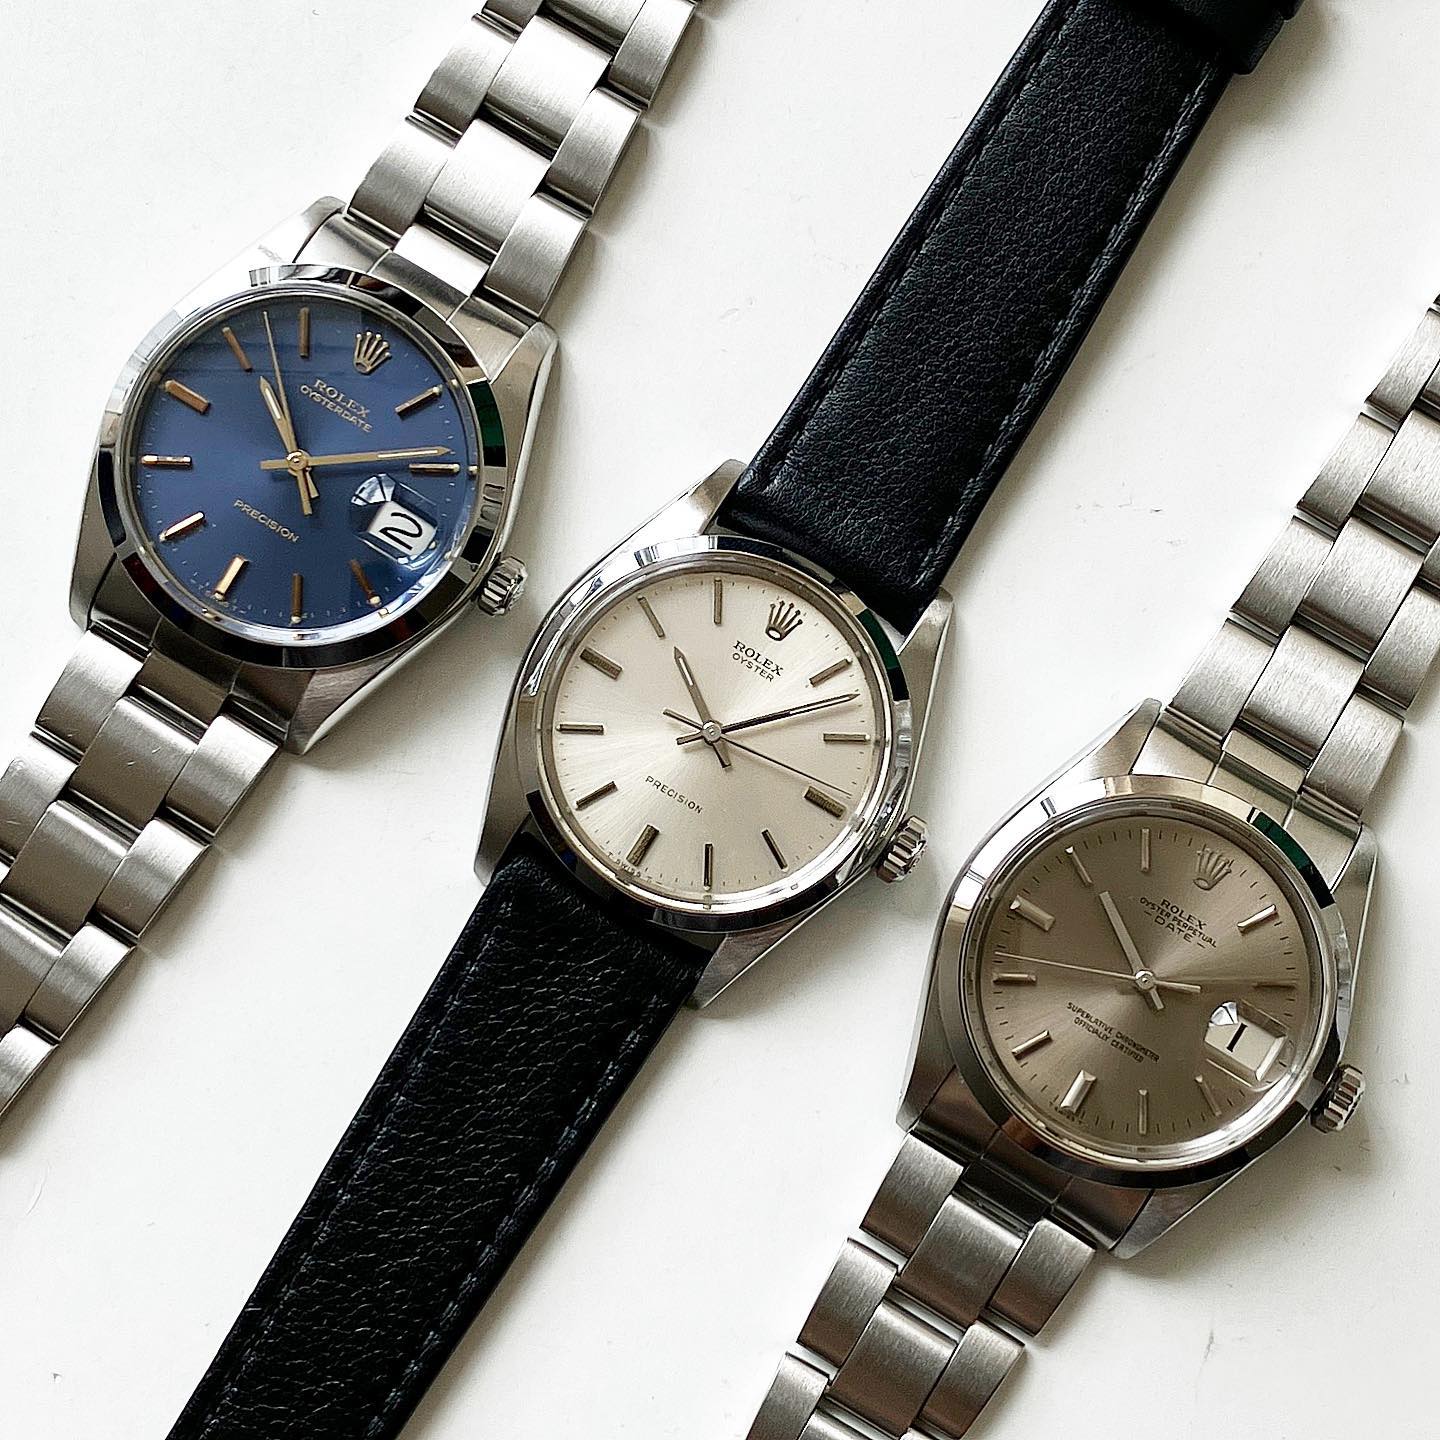 Three Rolex watches with different straps